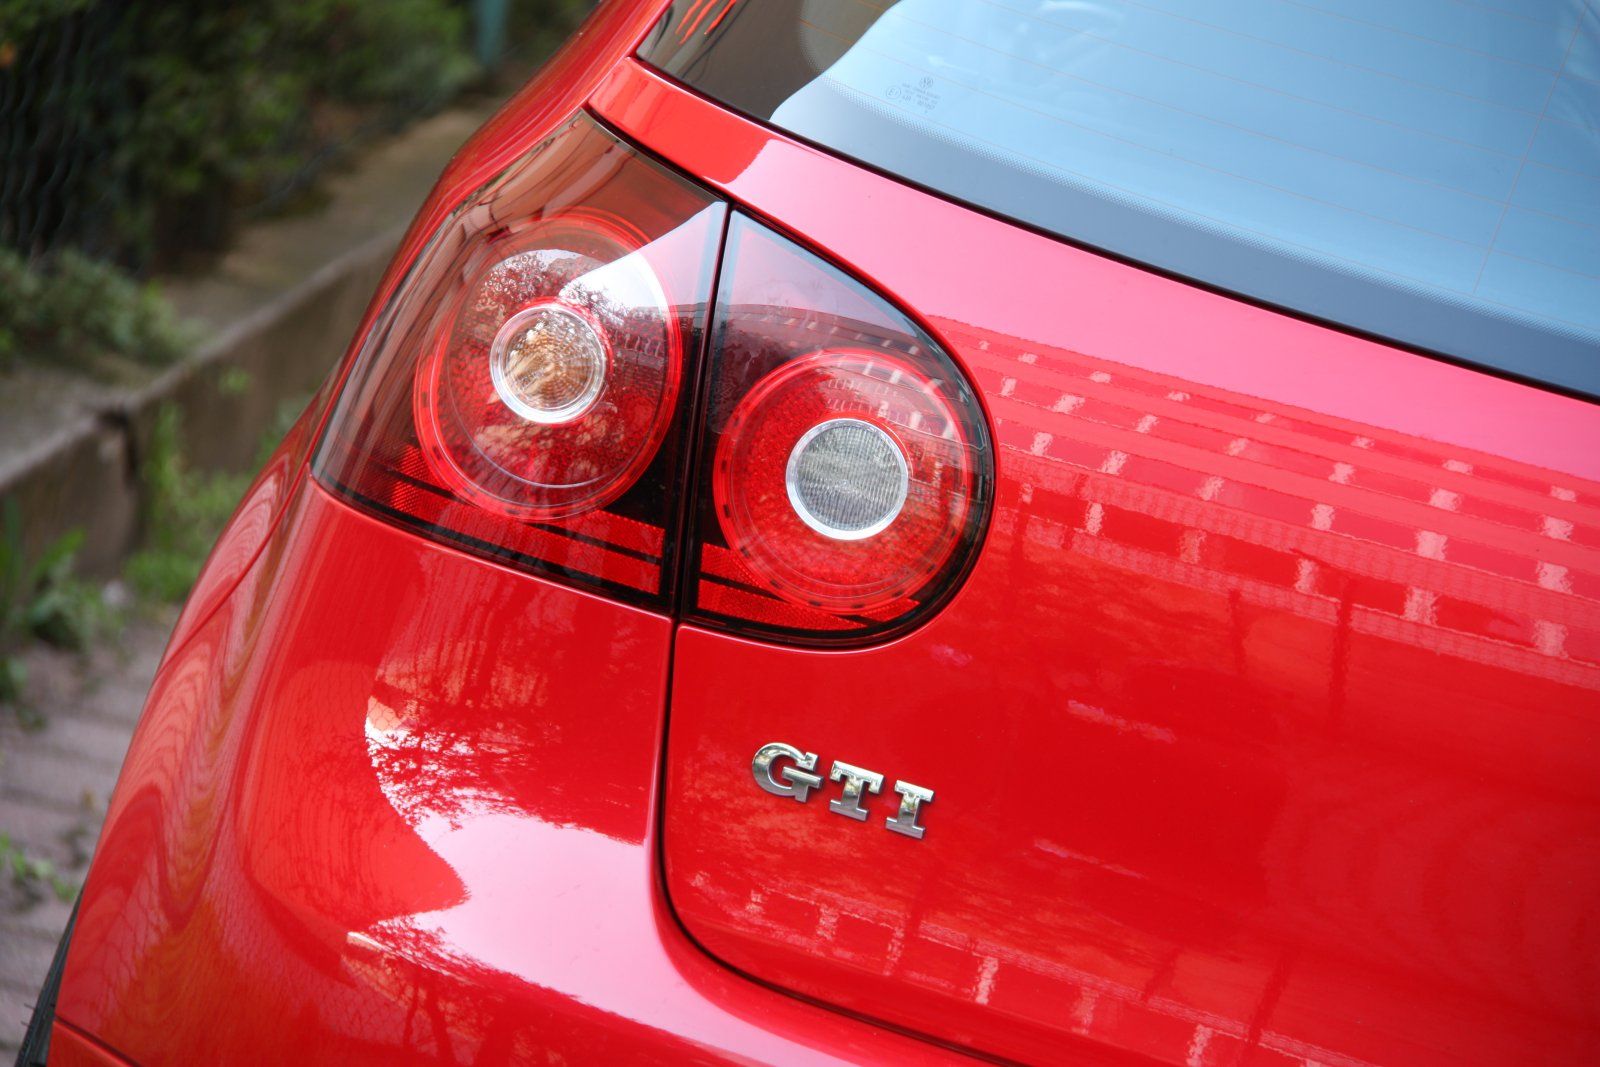 GTI logo
